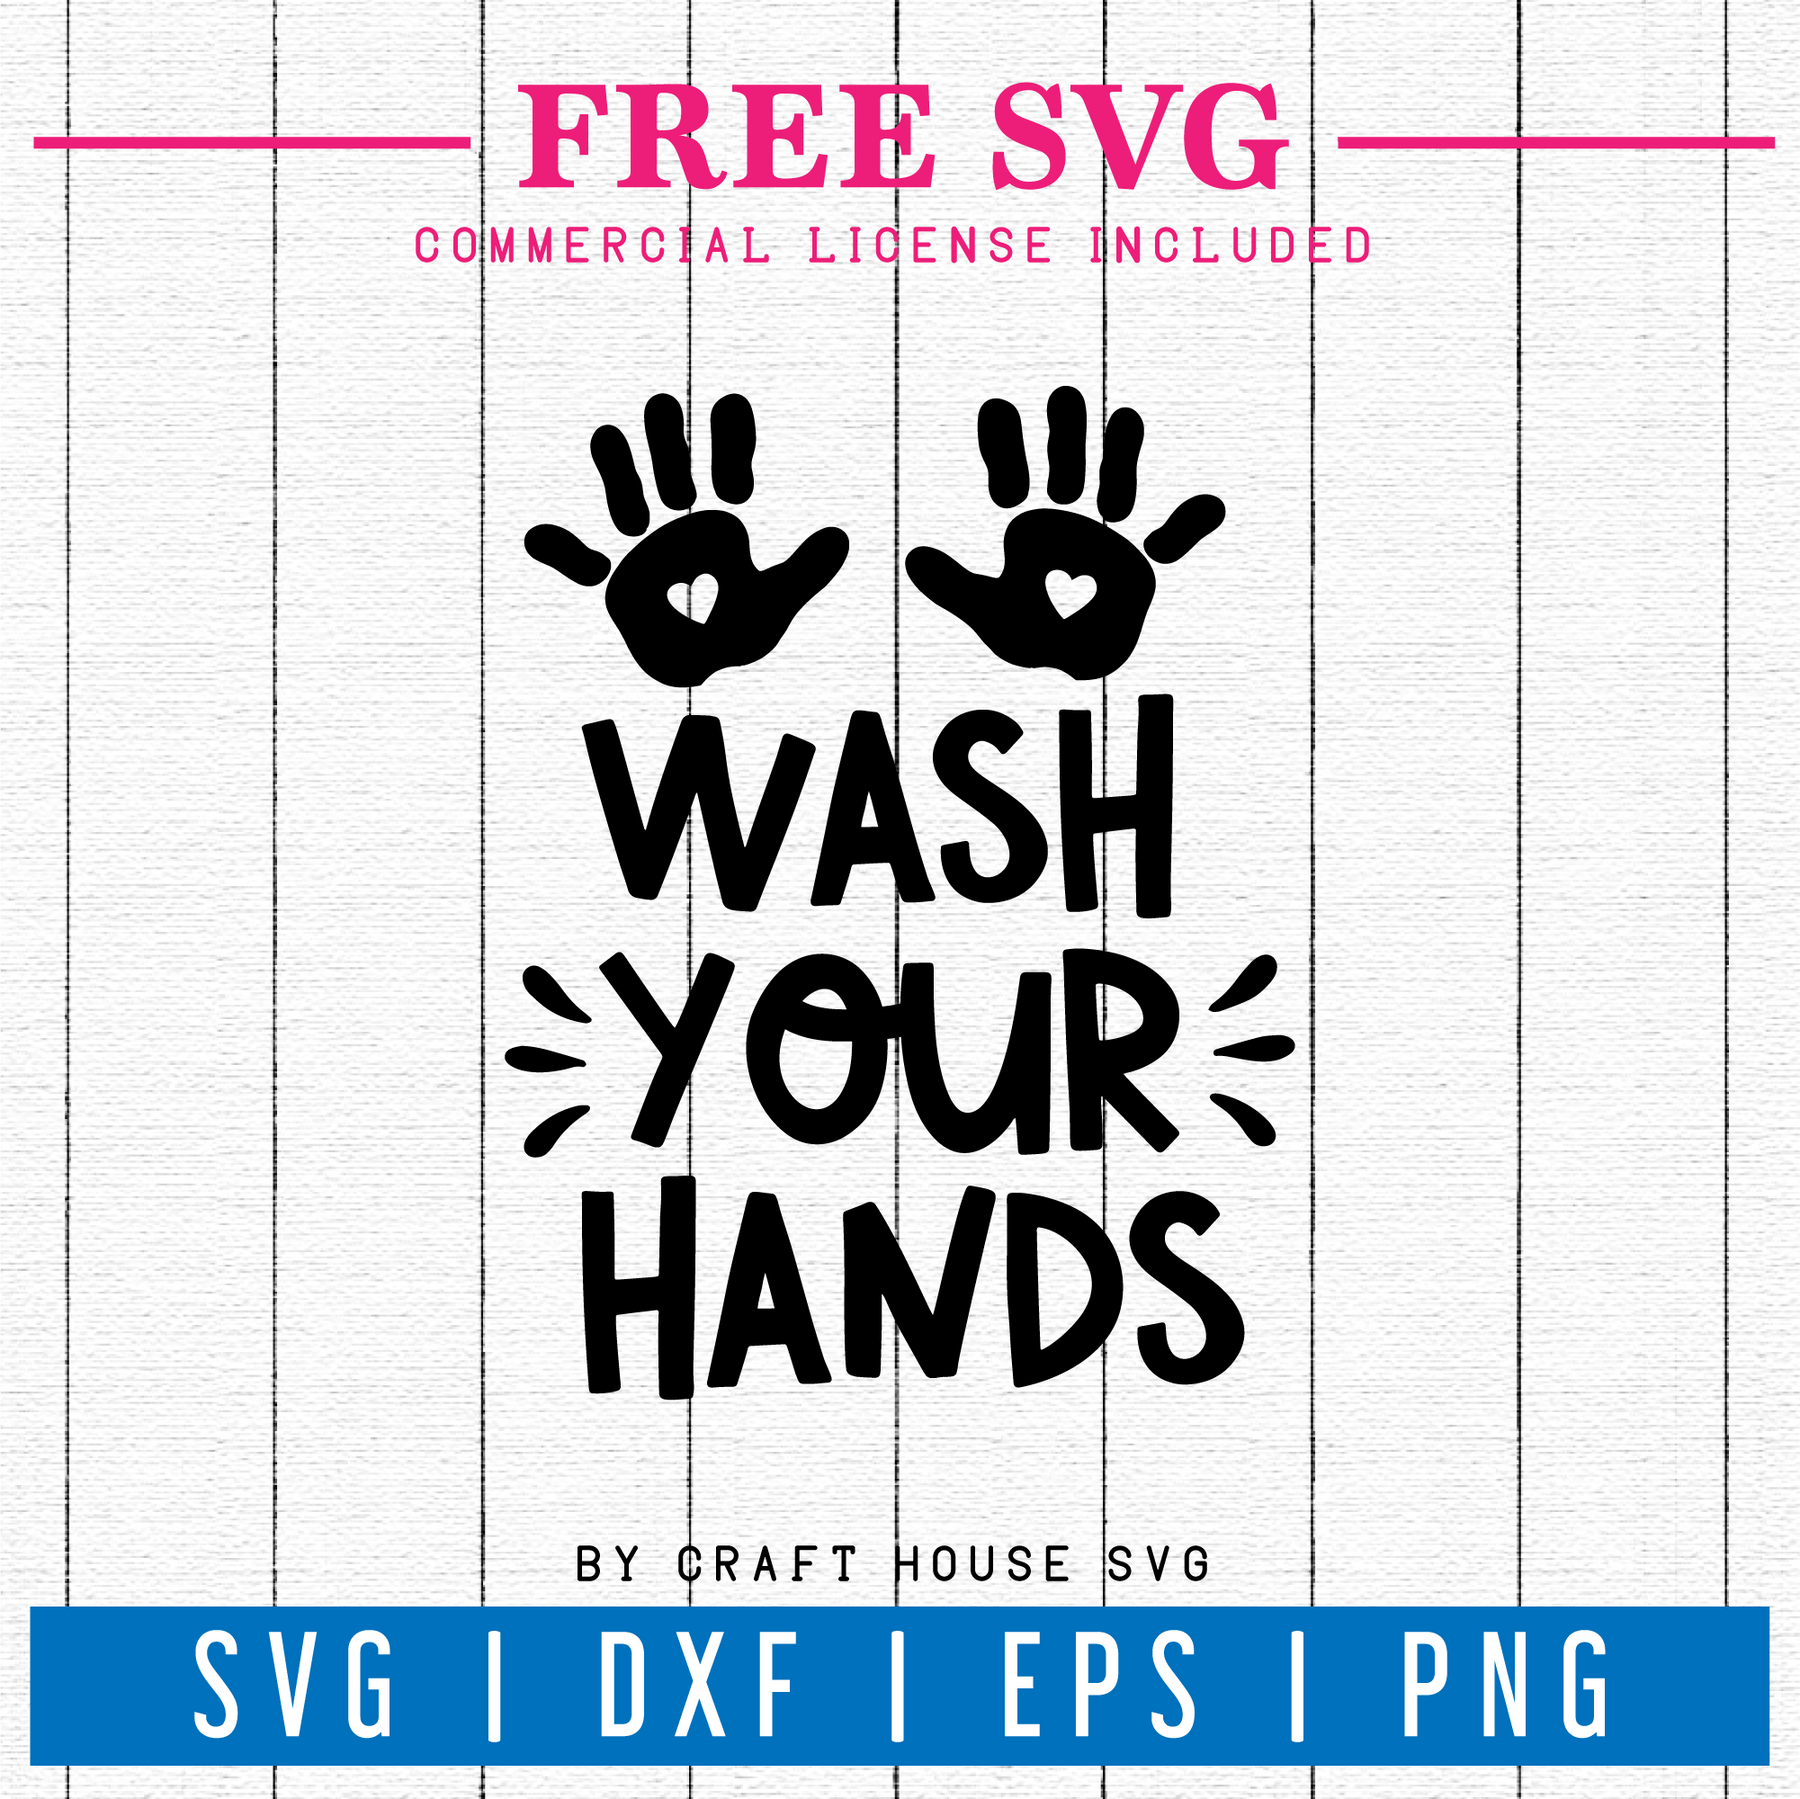 Download Free Wash your hands sign SVG | FB64 - Craft House SVG